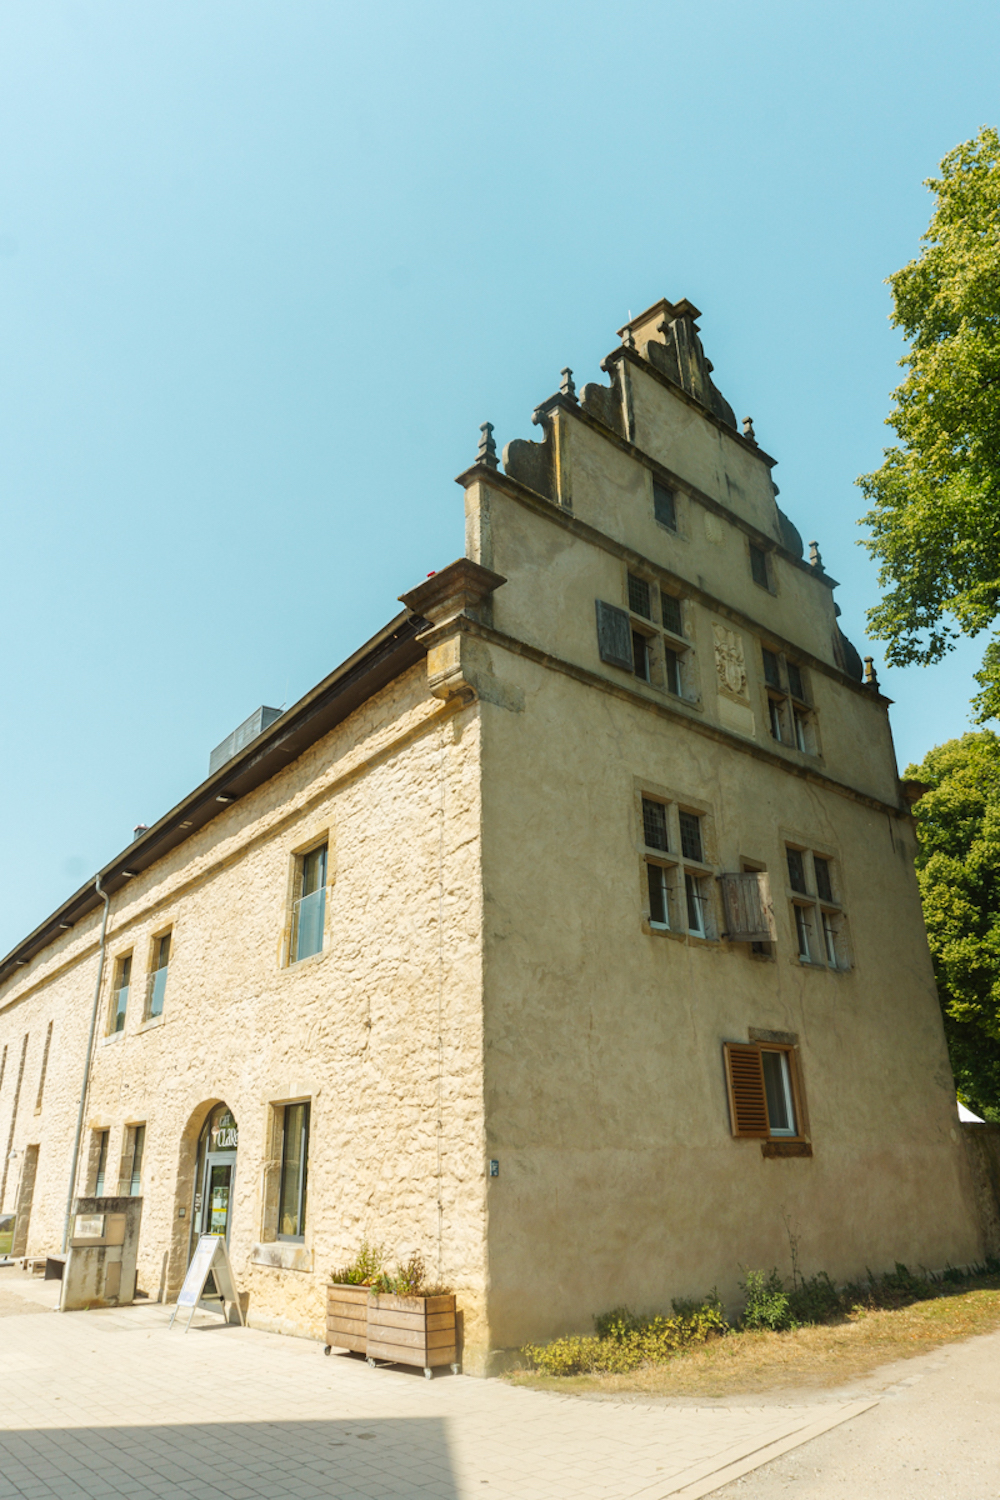 kloster gravenhorst grachtenpandje